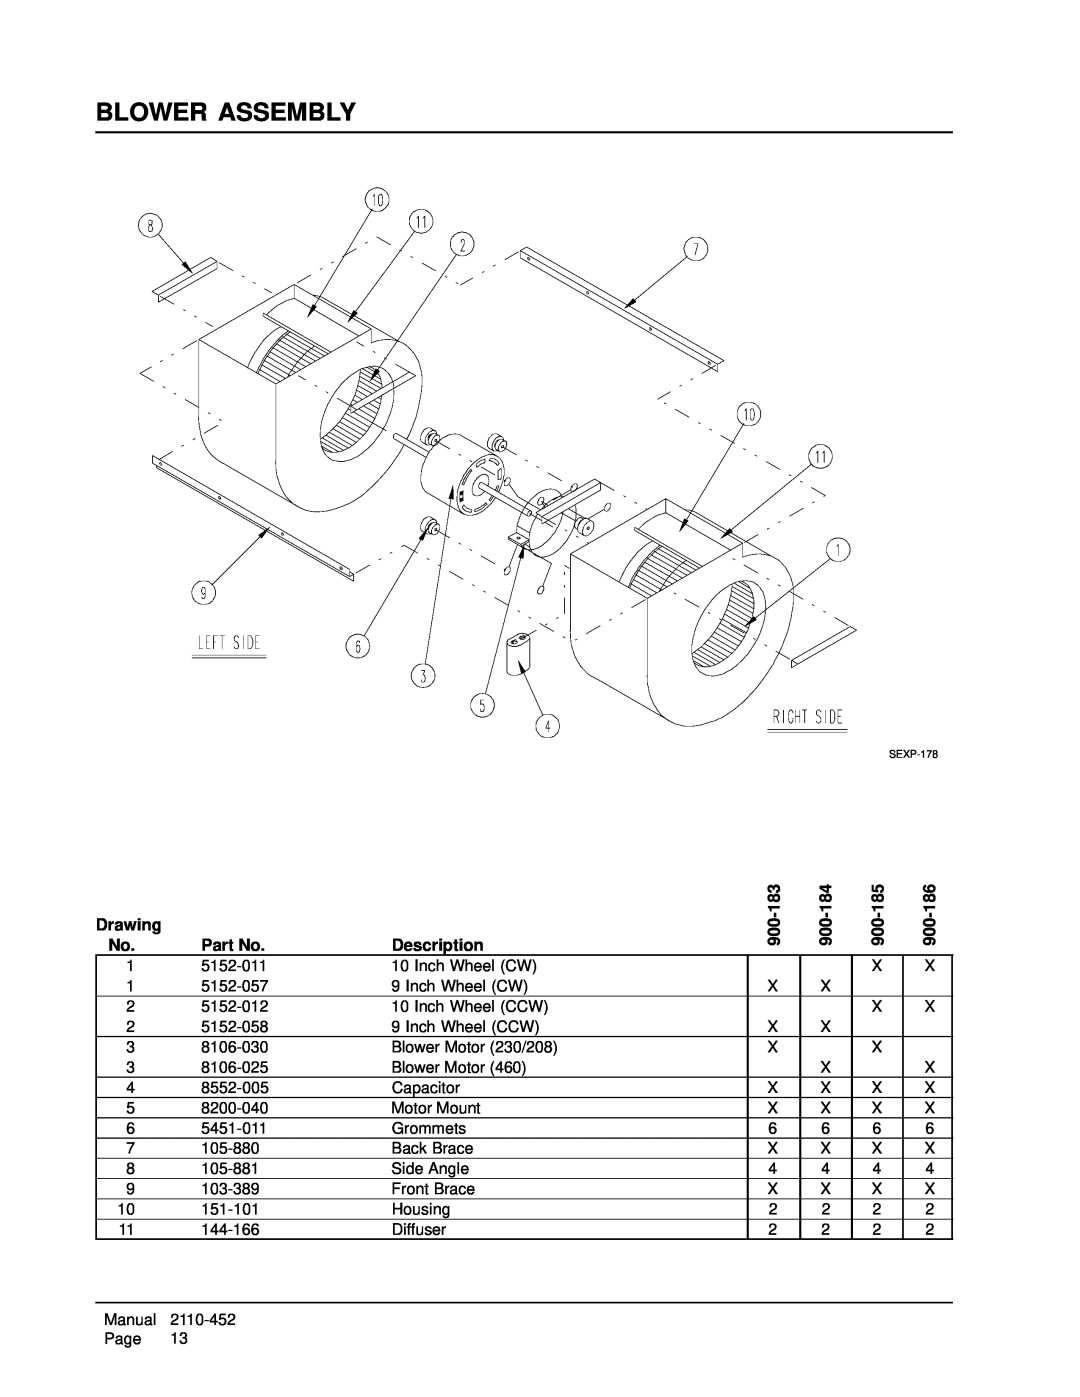 Bard WA423D, WA603D, WA484D manual Blower Assembly, Drawing, 900-183, 900-184, 900-185, 900-186, Description 